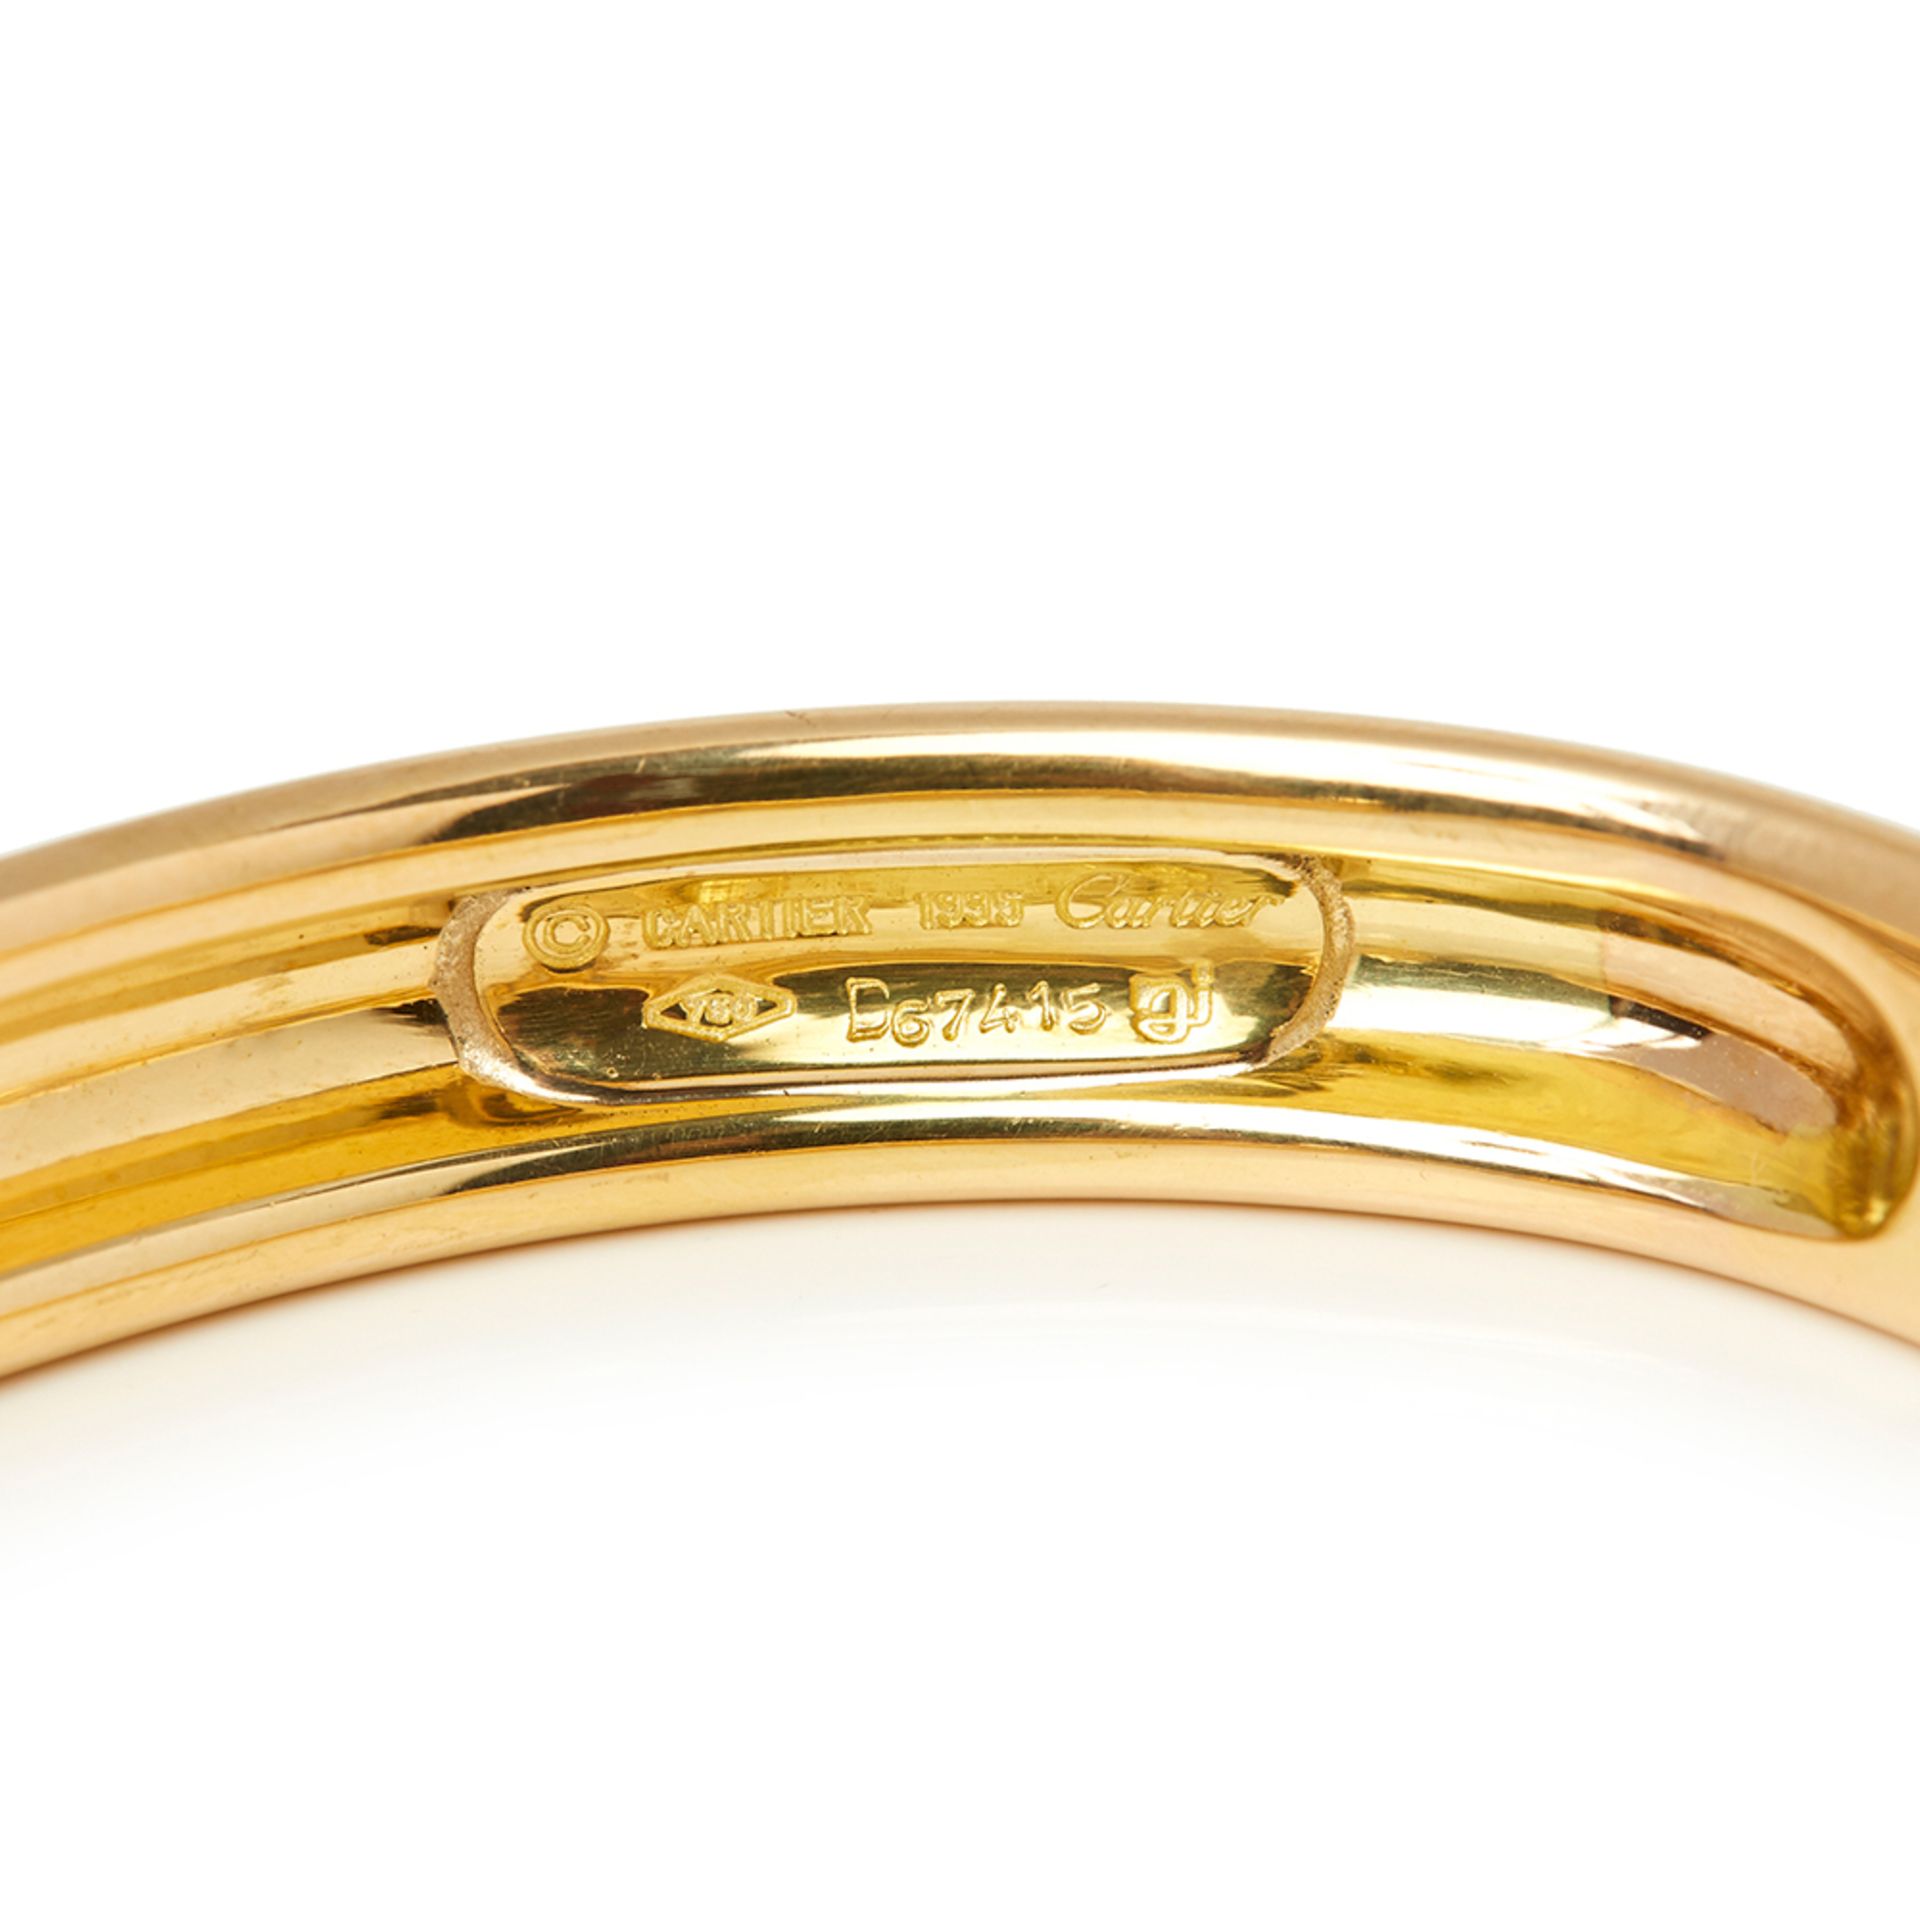 Cartier 18k Yellow Gold Sapphire & Diamond Cuff Bracelet - Image 7 of 9